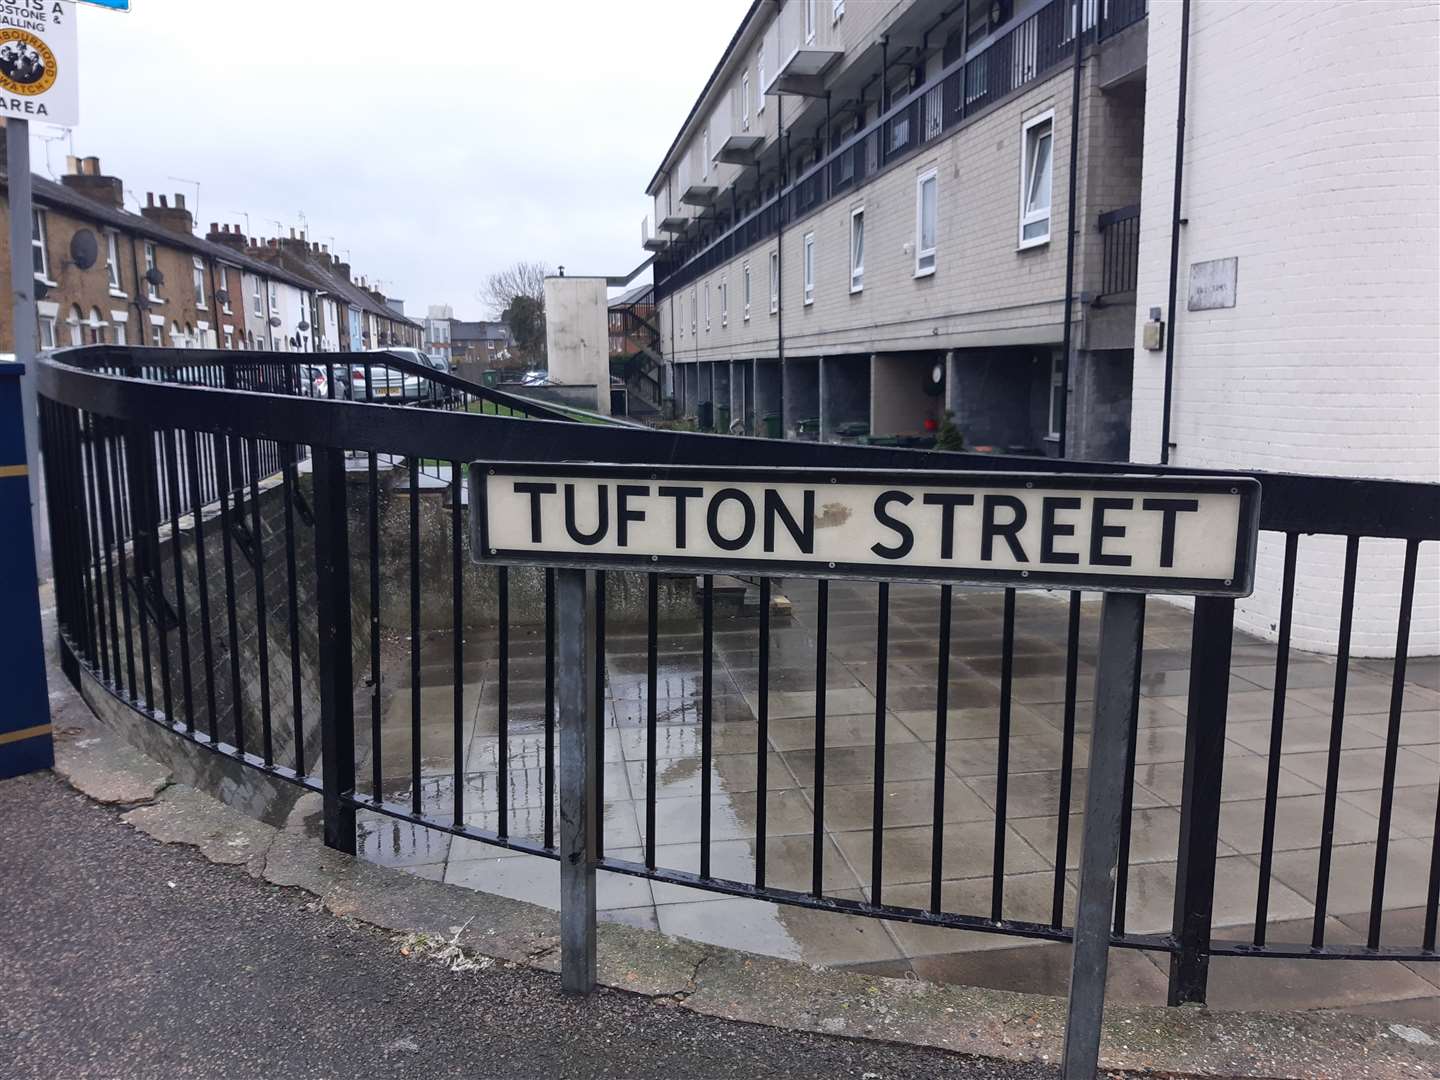 The flat in Tufton Street, where Mrs Rose lives